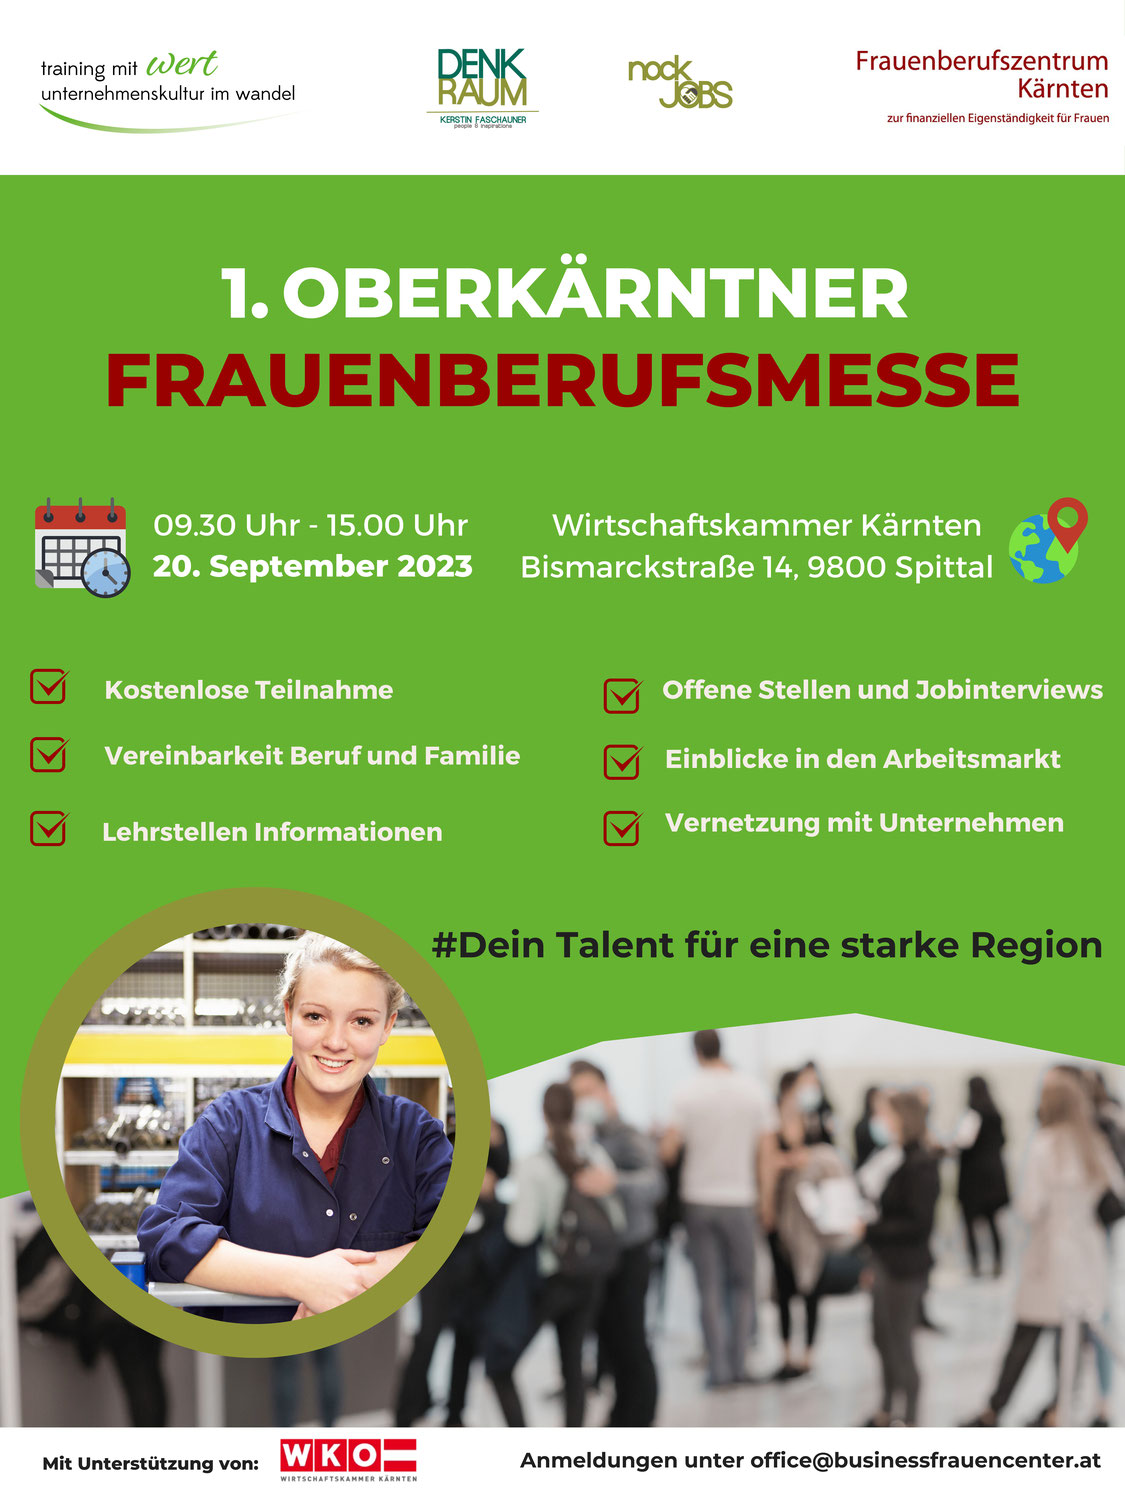 1. Oberkärntner Frauenberufsmesse am 20. September 2023